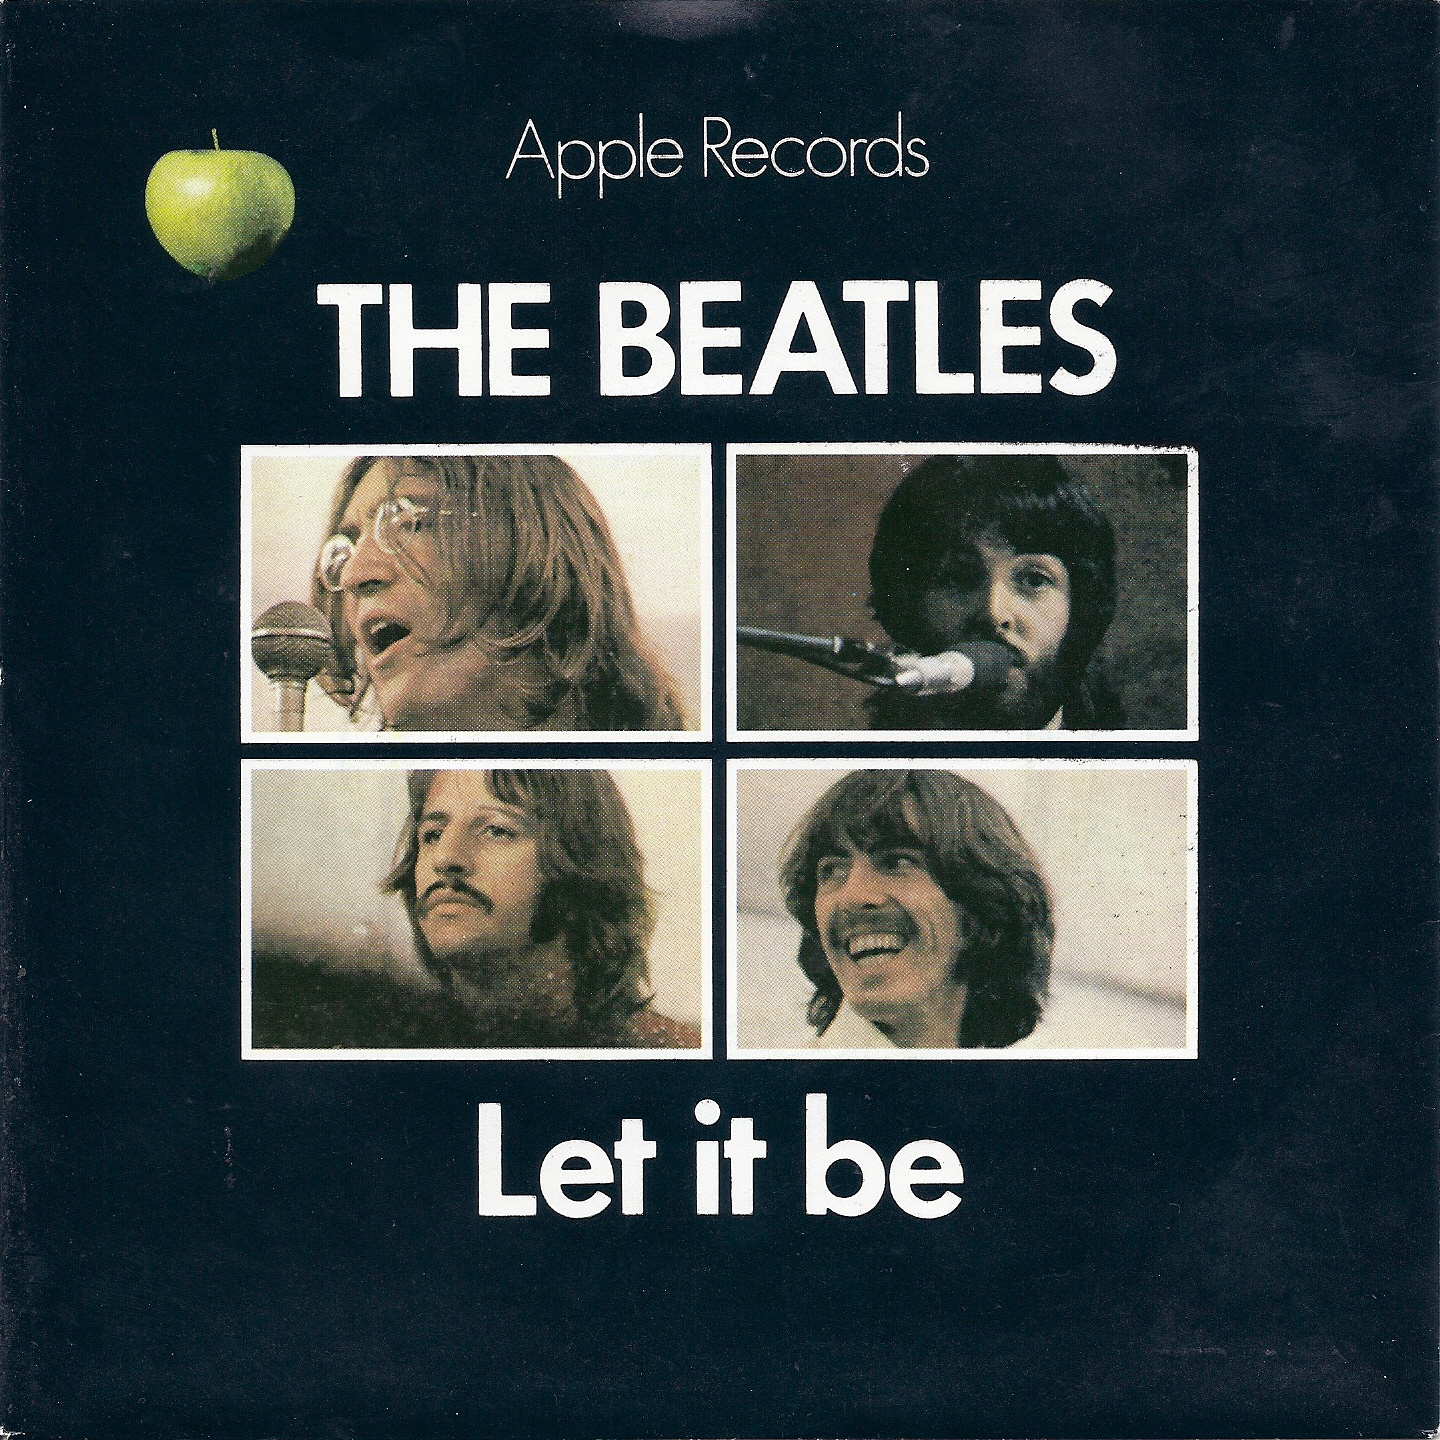 Лет ит би слушать. Битлз обложка Let it. Битлз Let ИТ би. “Let it be” сингл 1970. The Beatles Let it be обложка.